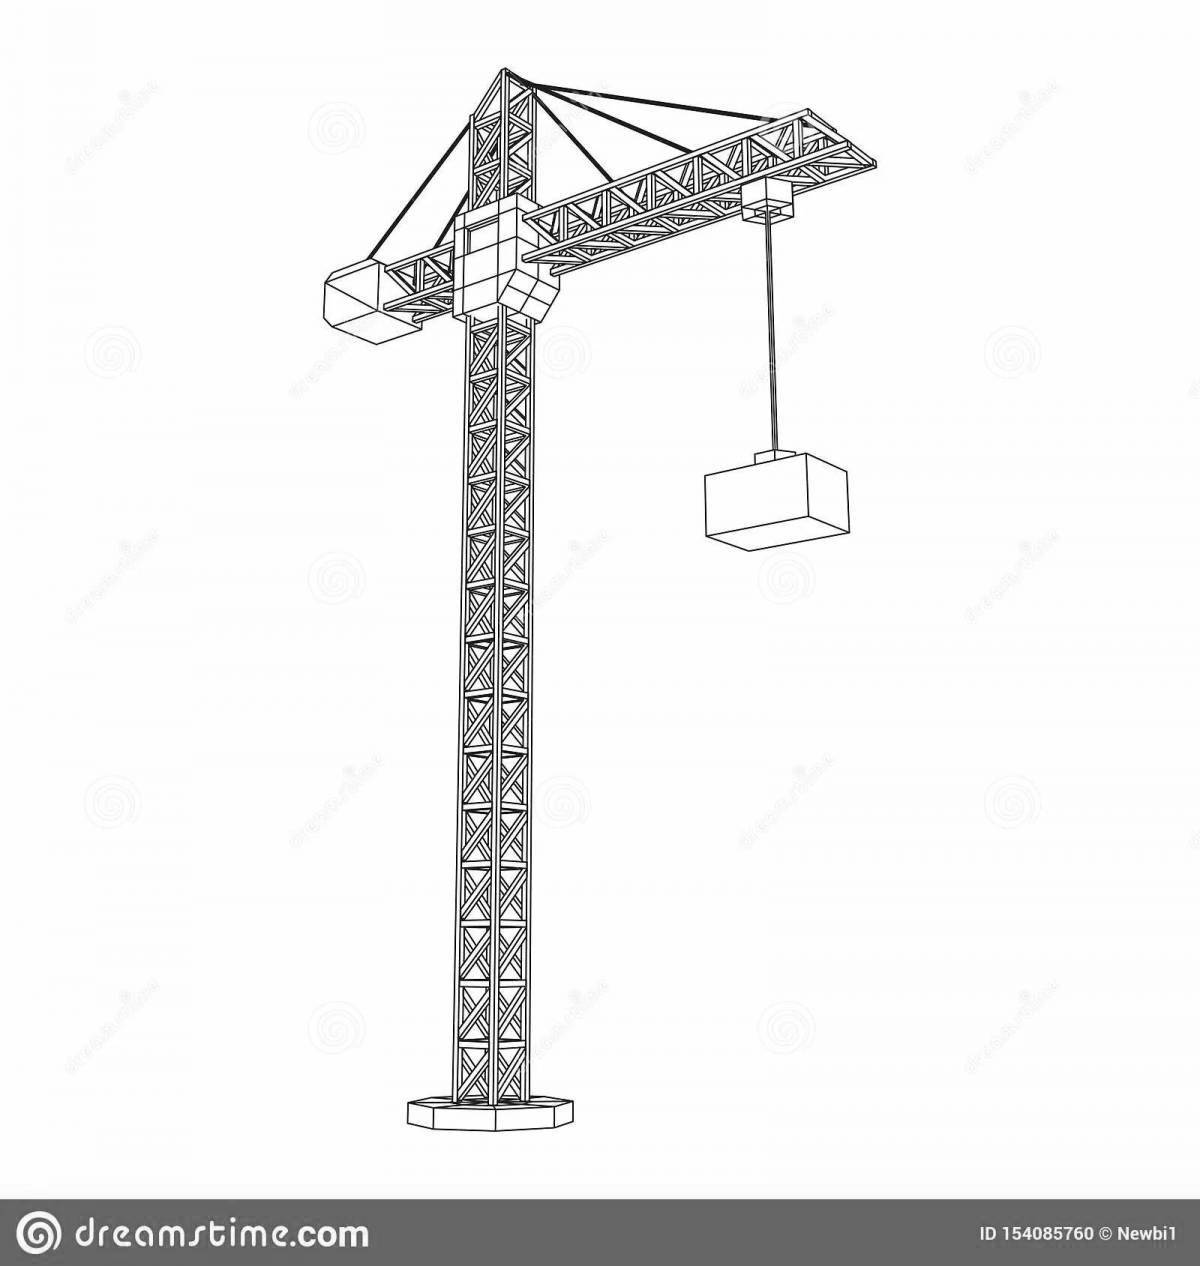 Tower crane #17